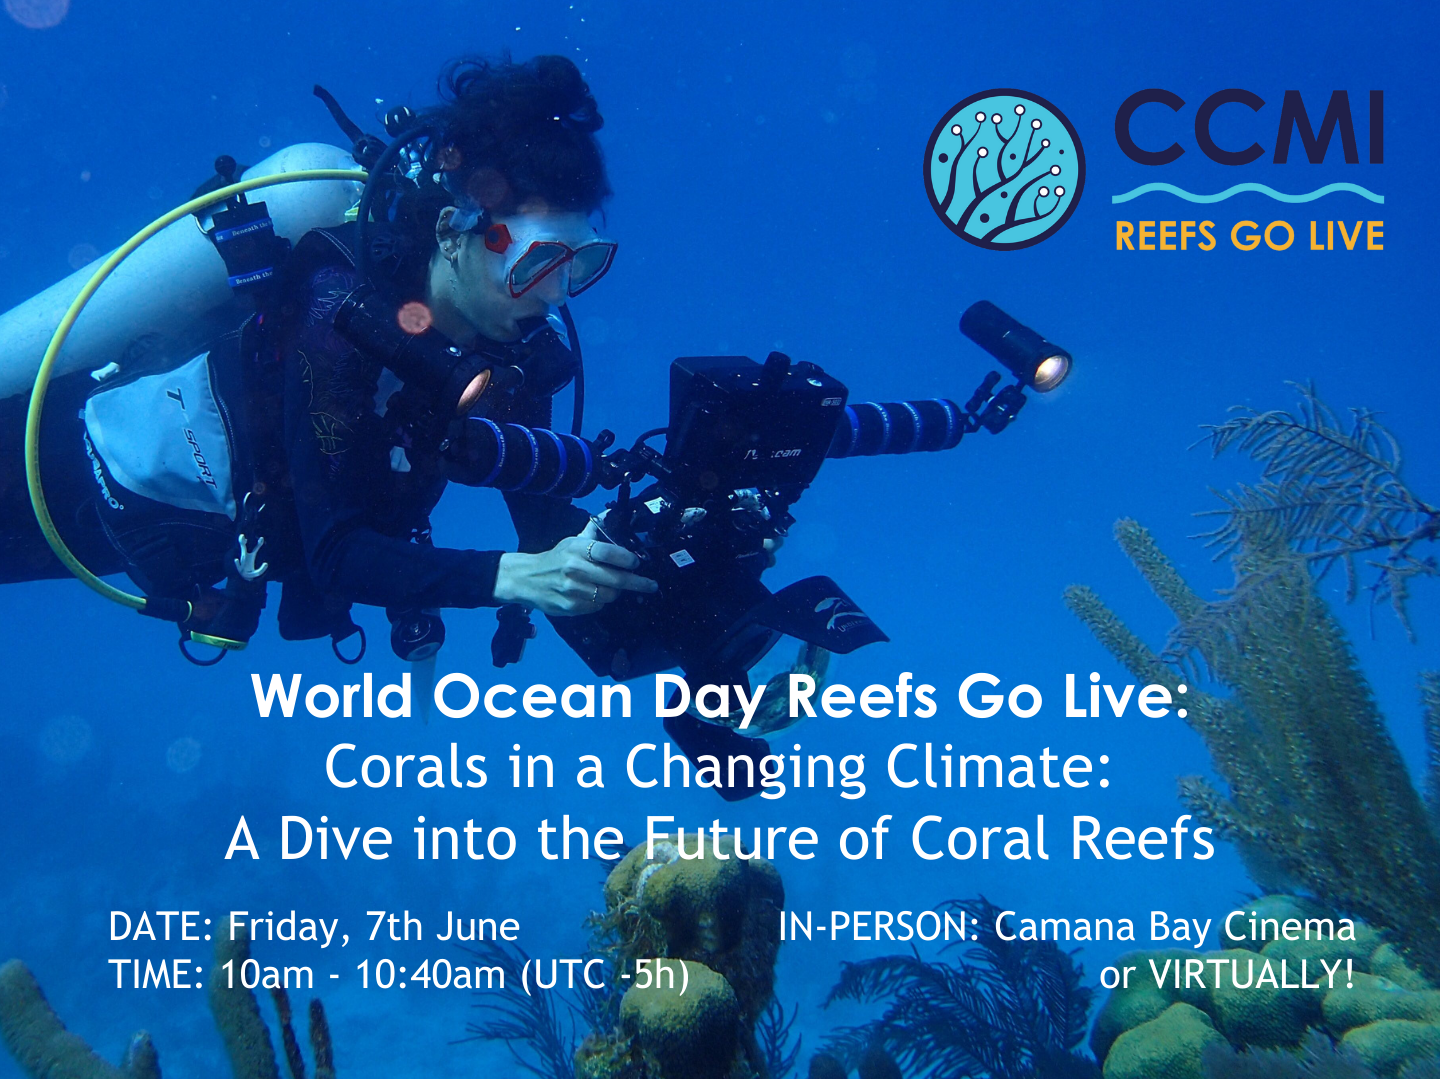 World Ocean Day Reefs Go Live at the Camana Bay Cinema